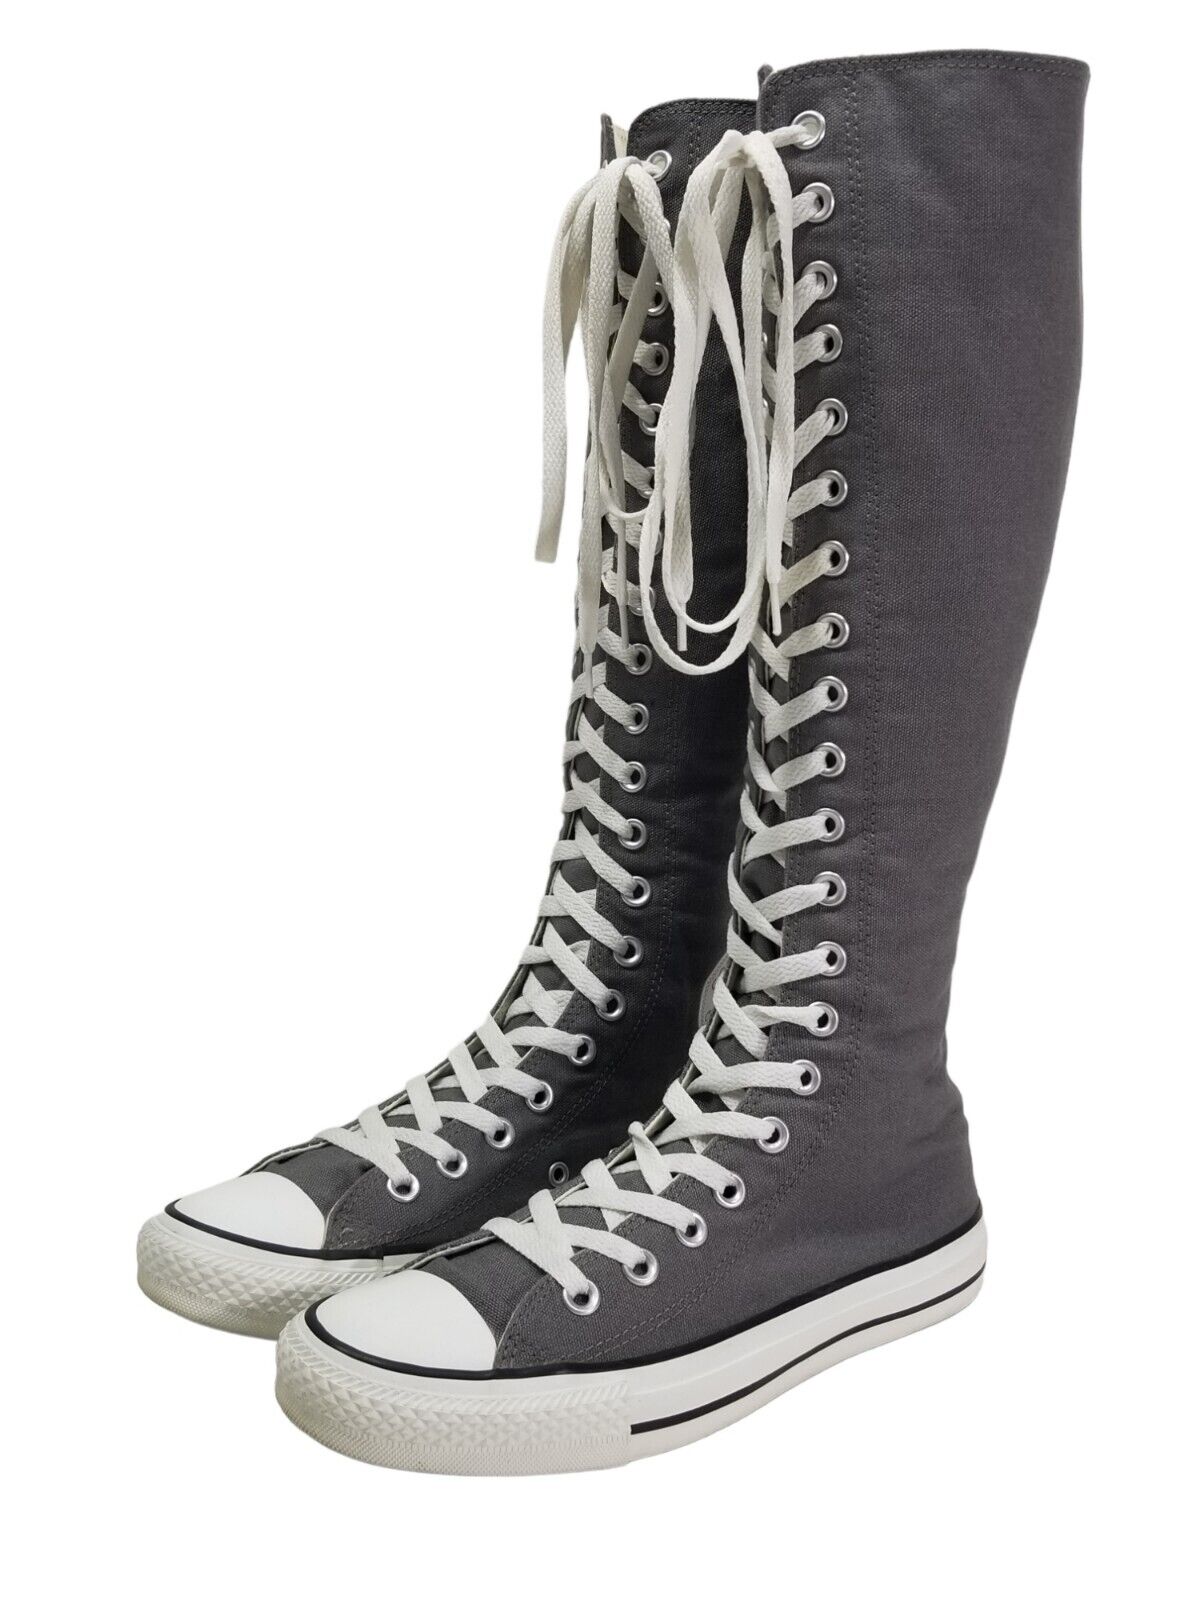 Converse All Star Chuck Taylor Gray Knee High Womens US Size 7.5 Grunge | eBay